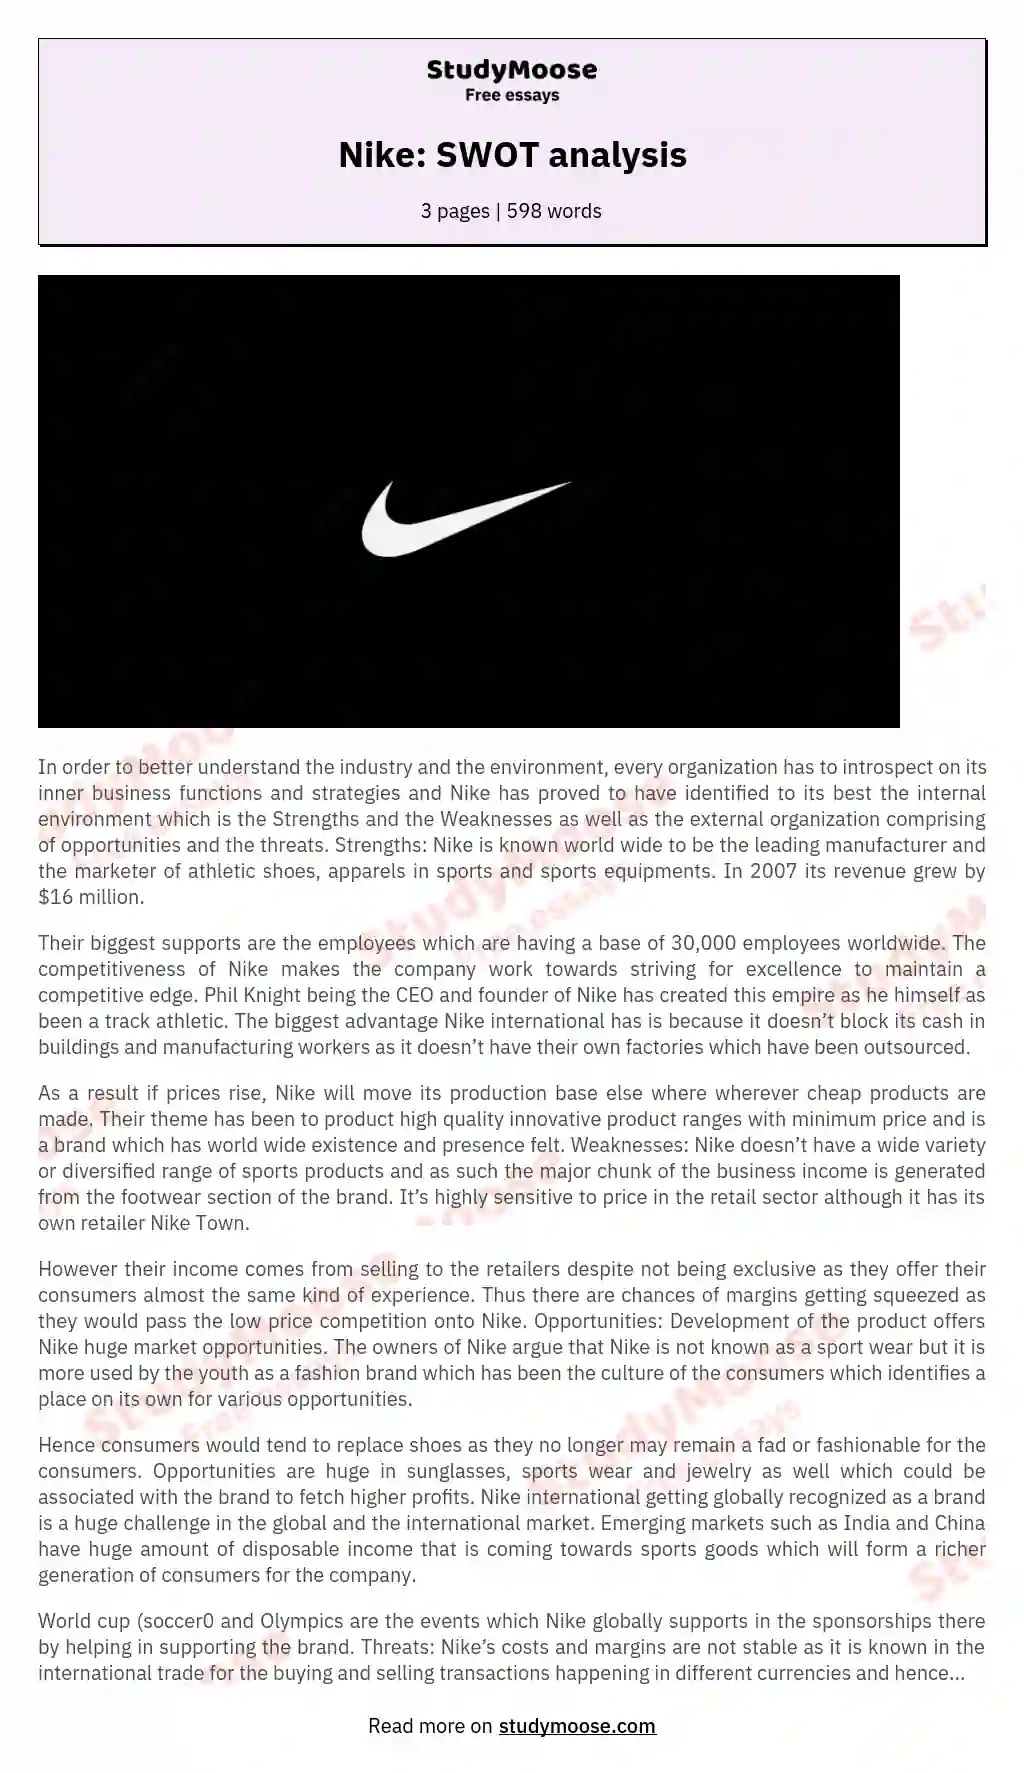 Nike: SWOT analysis essay